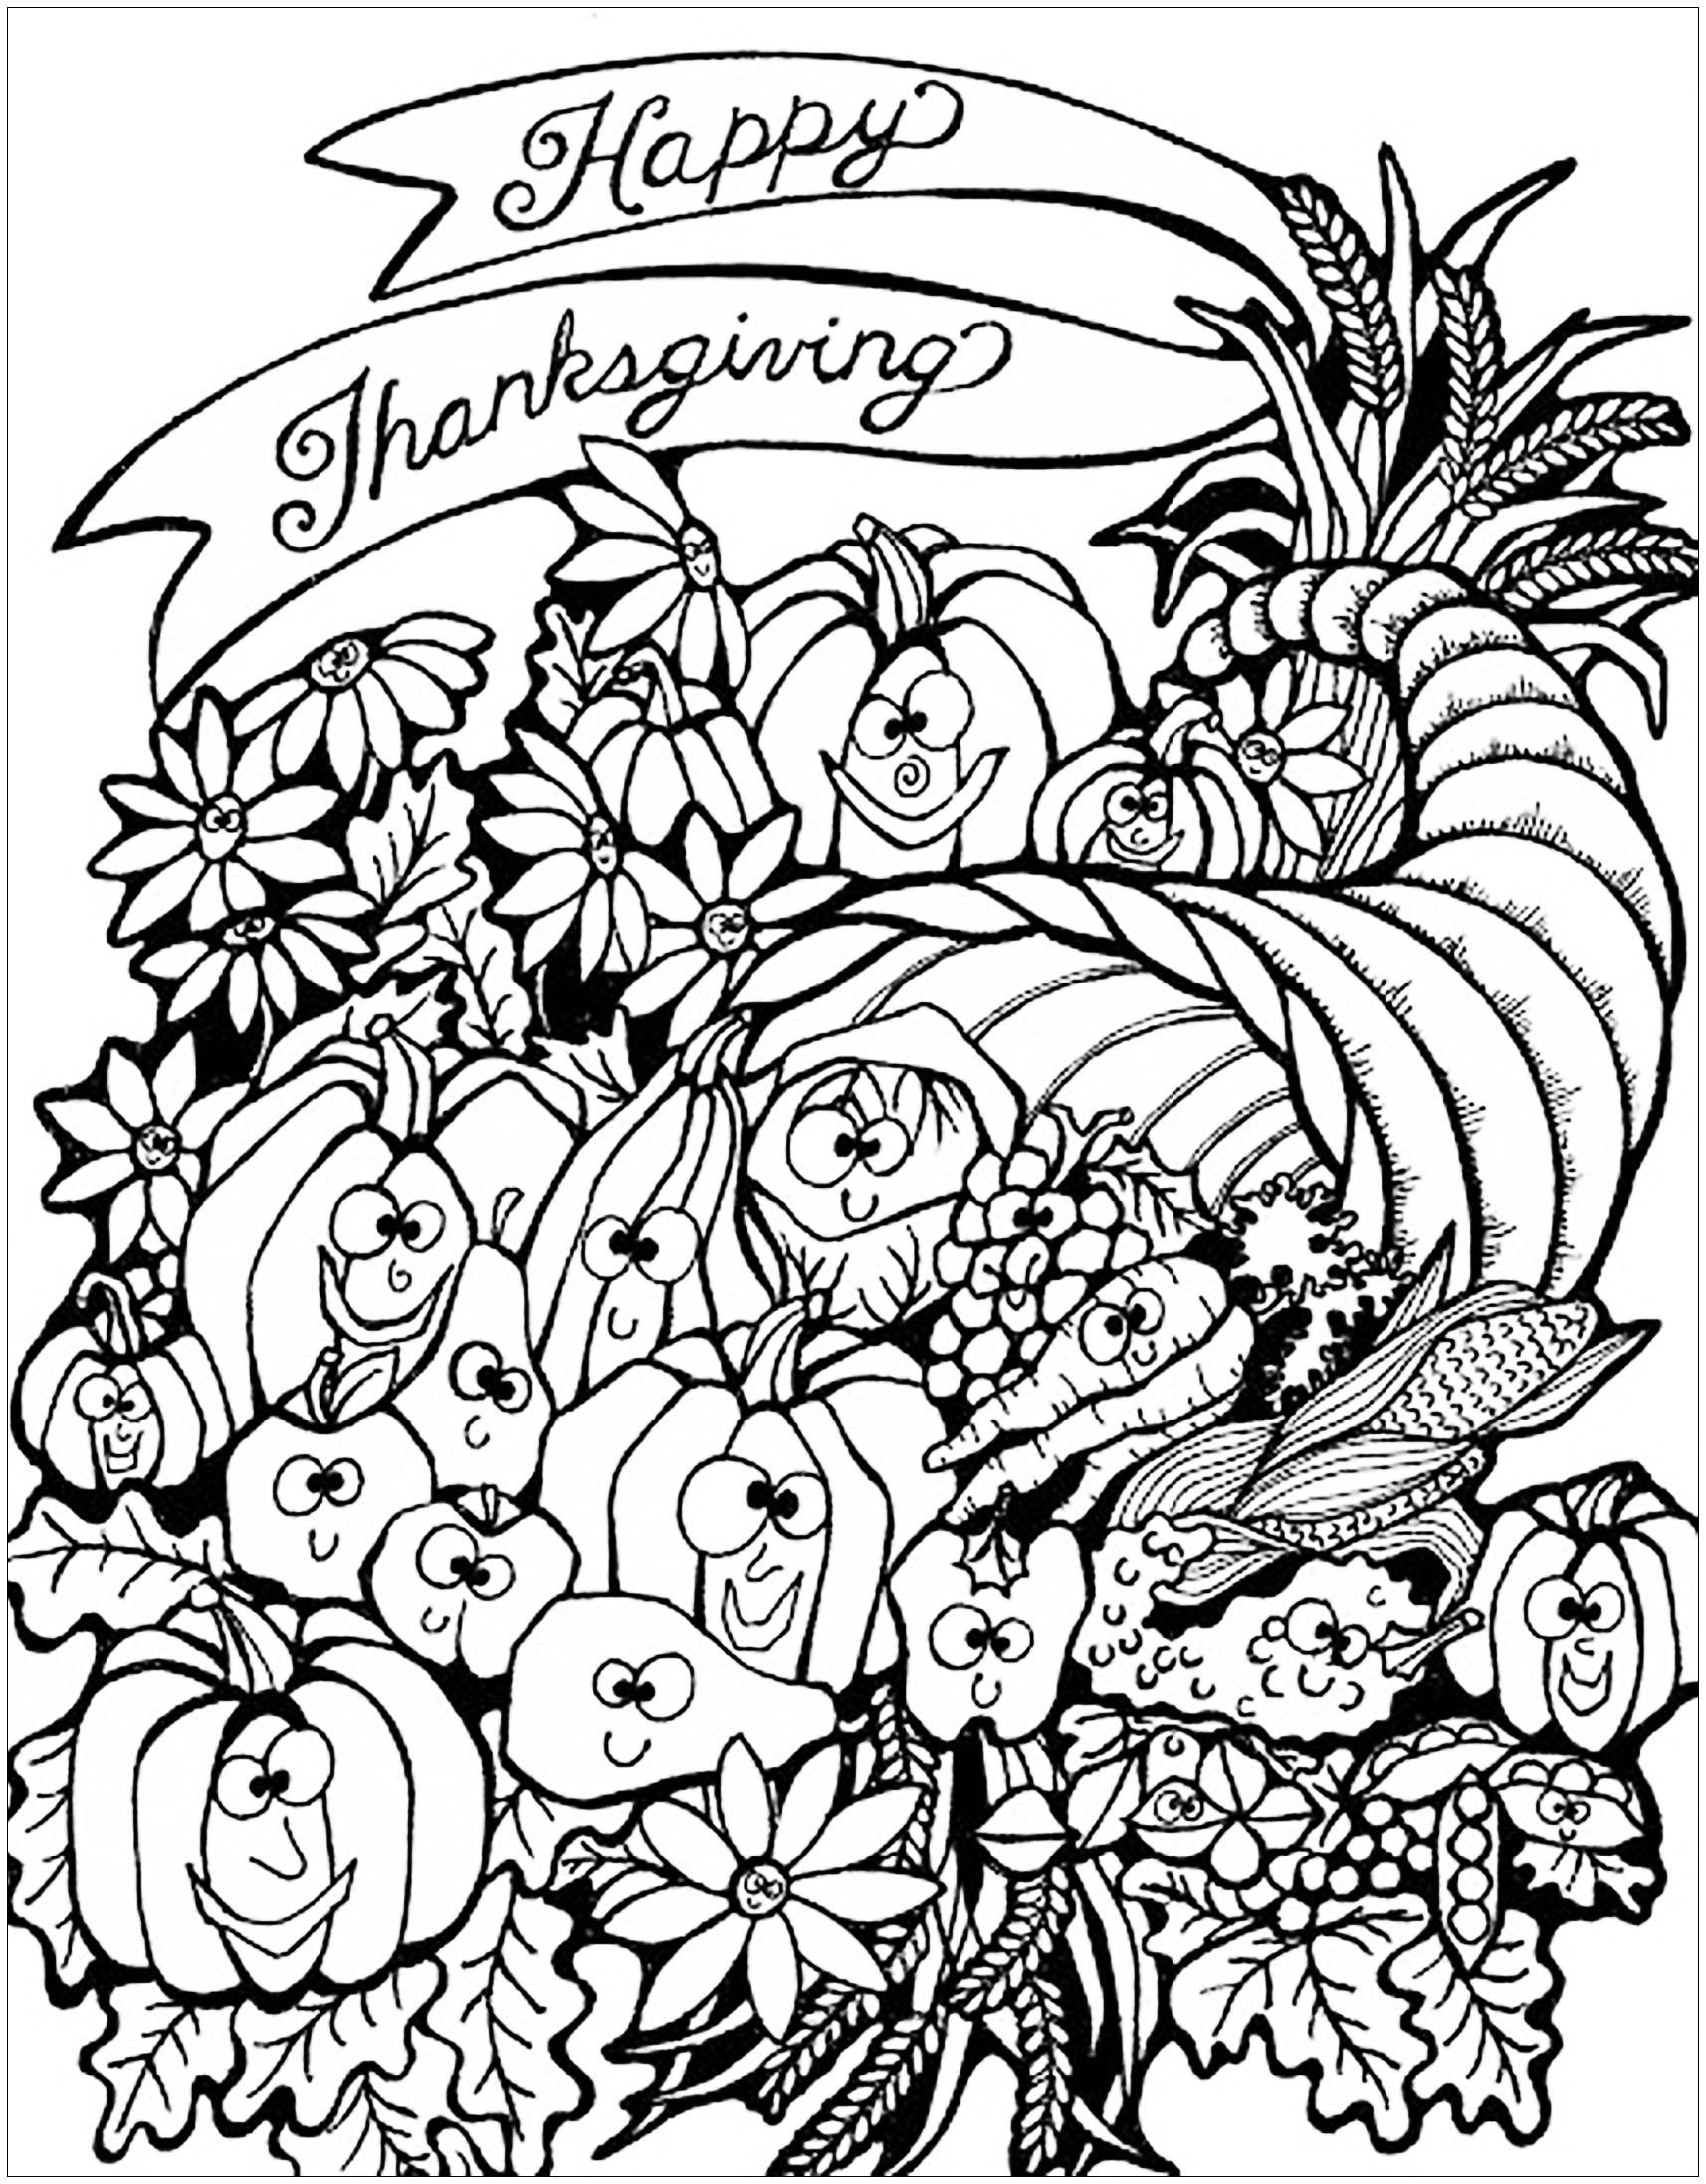 free-printable-thanksgiving-coloring-sheets-printable-templates